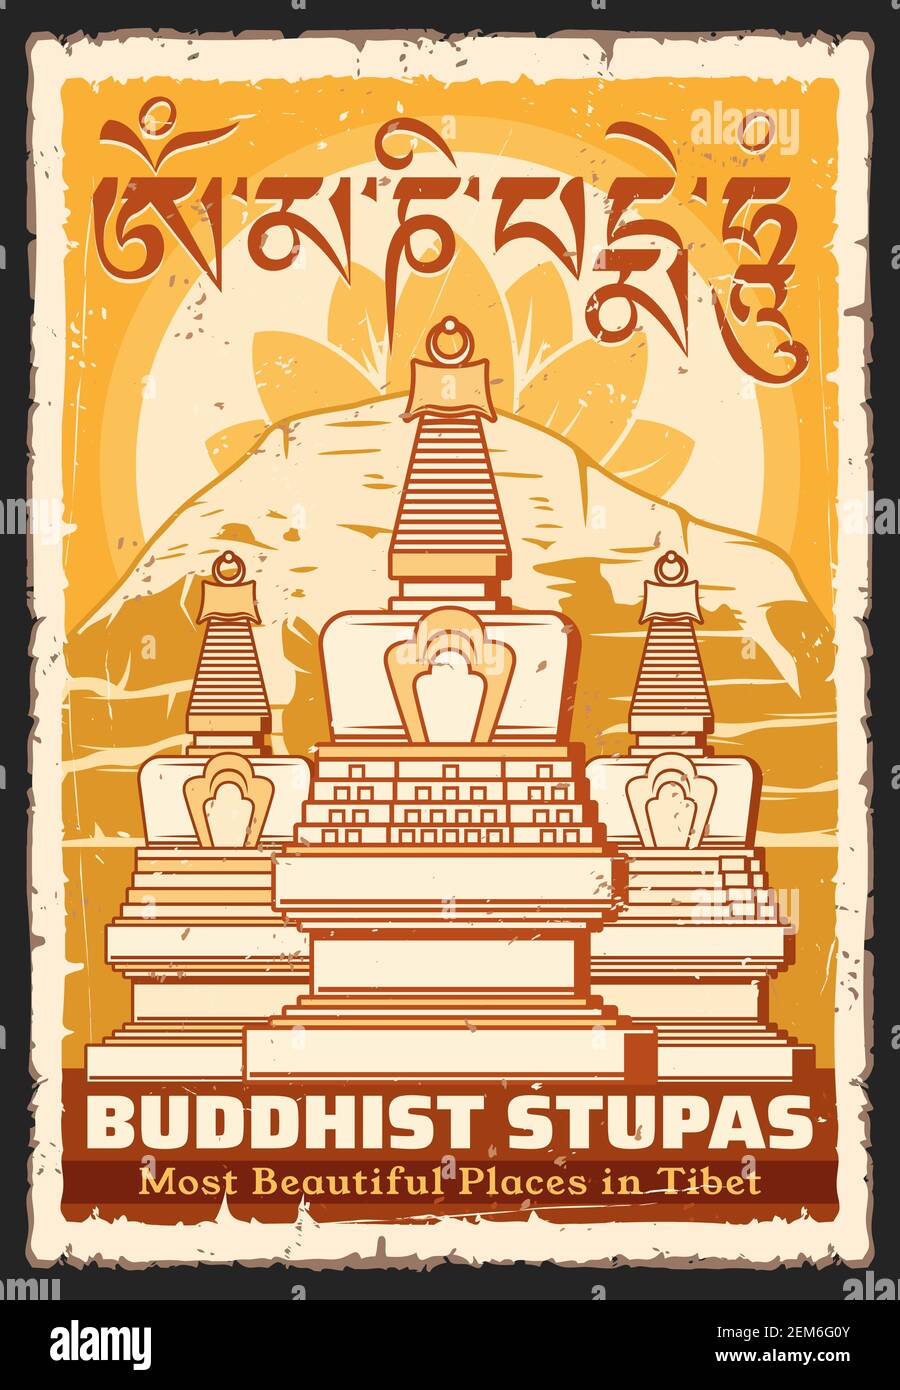 Tibetan Buddhism, vector vintage retro poster, Tibetan Buddhist landmarks and religious shrines. Tiber Buddha temple stupas of Potala Palace of and Mo Stock Vector